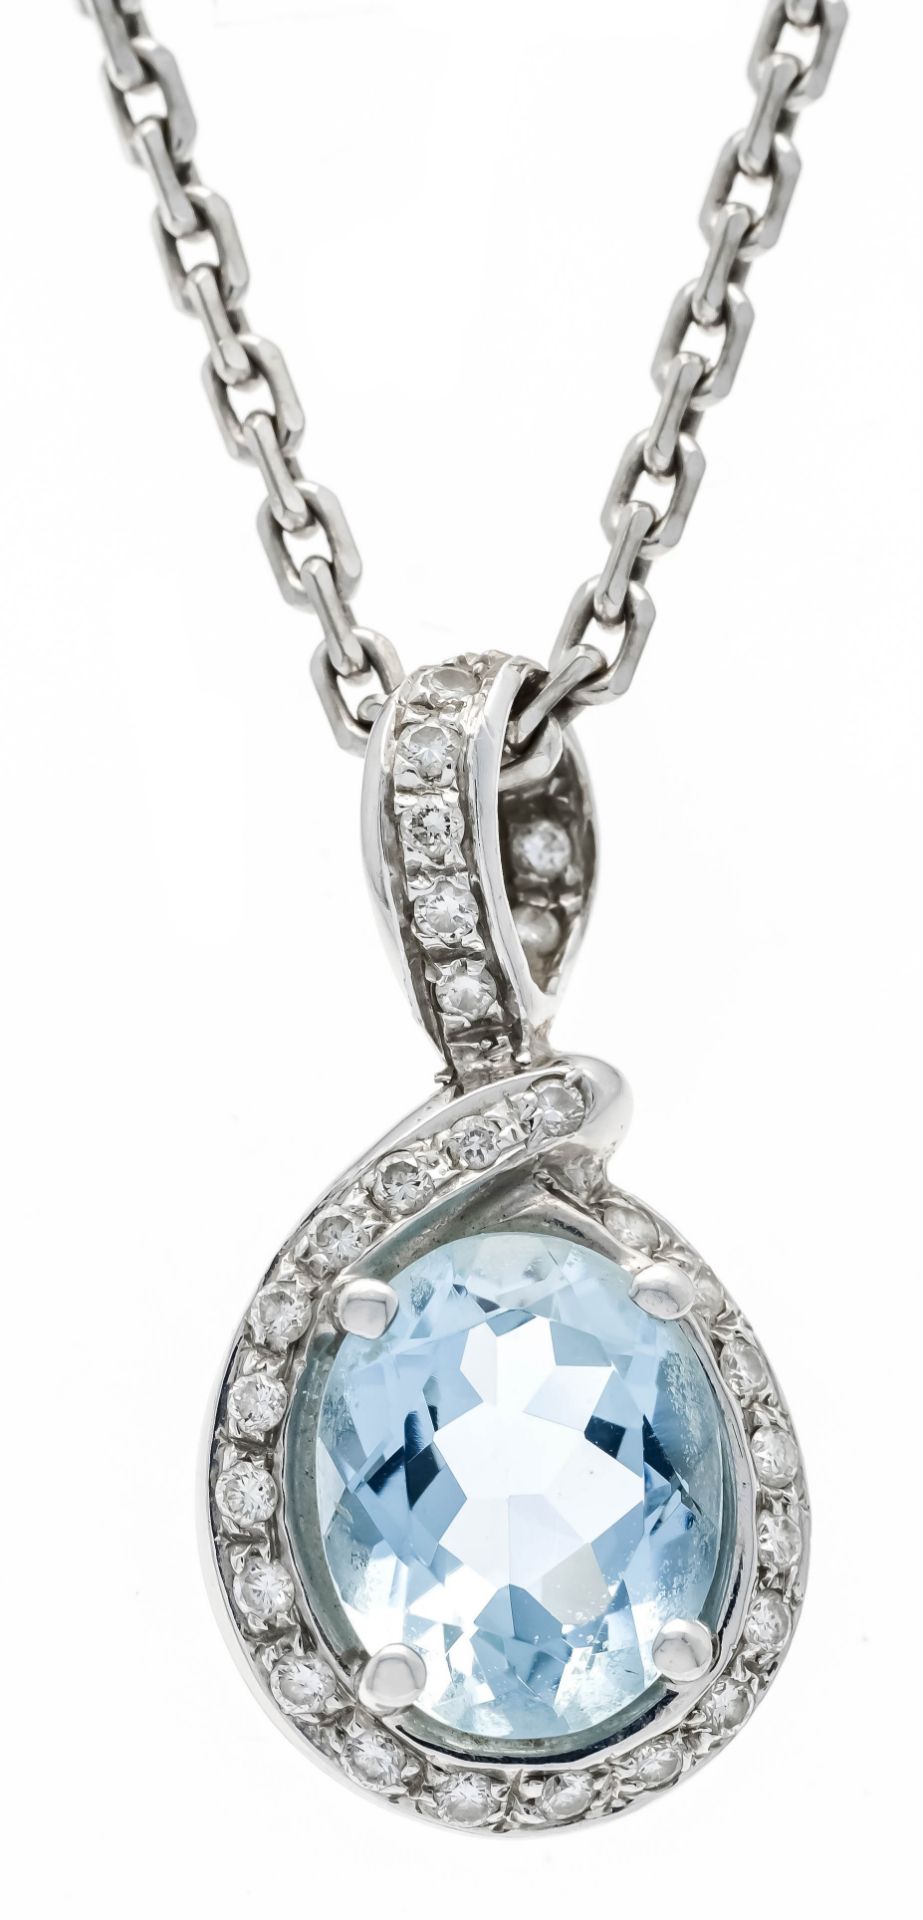 Aquamarine-brilliant pendant WG 750/000 3.6 g, with an oval faceted aquamarine 10.0 x 8.0 mm light